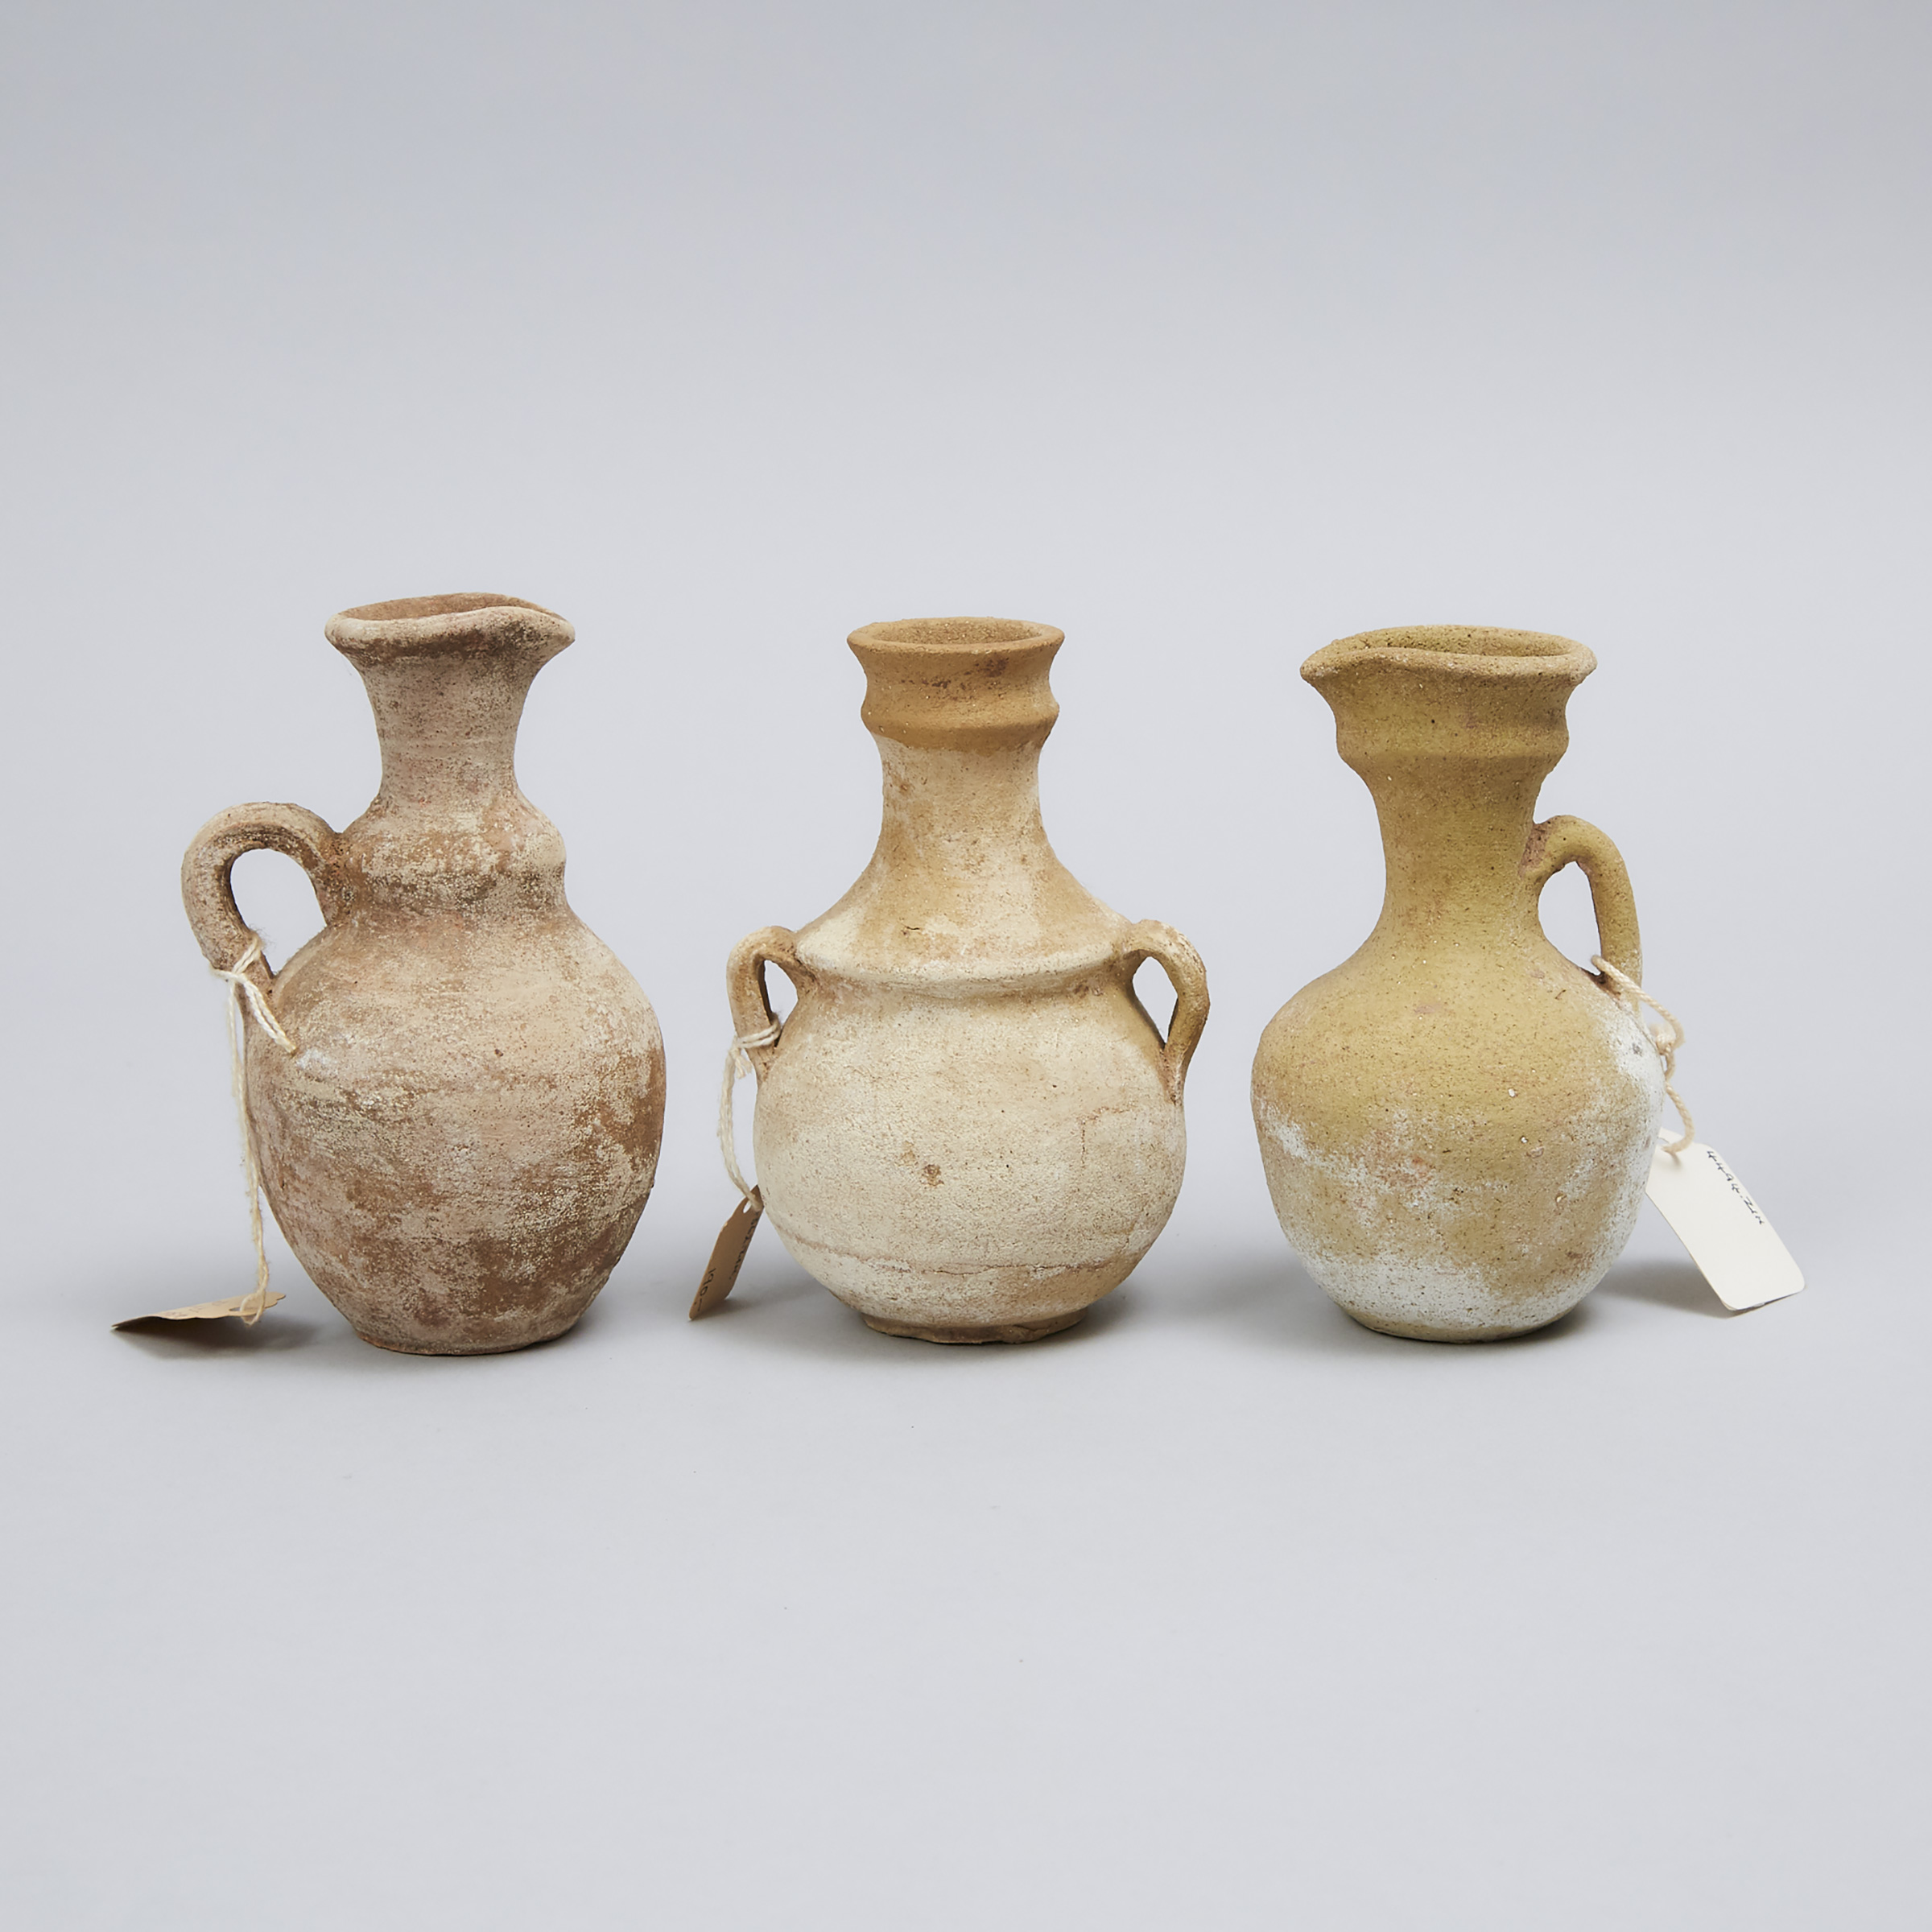 Three Cypro-Phoenician Pottery Juglets, 400 B.C.